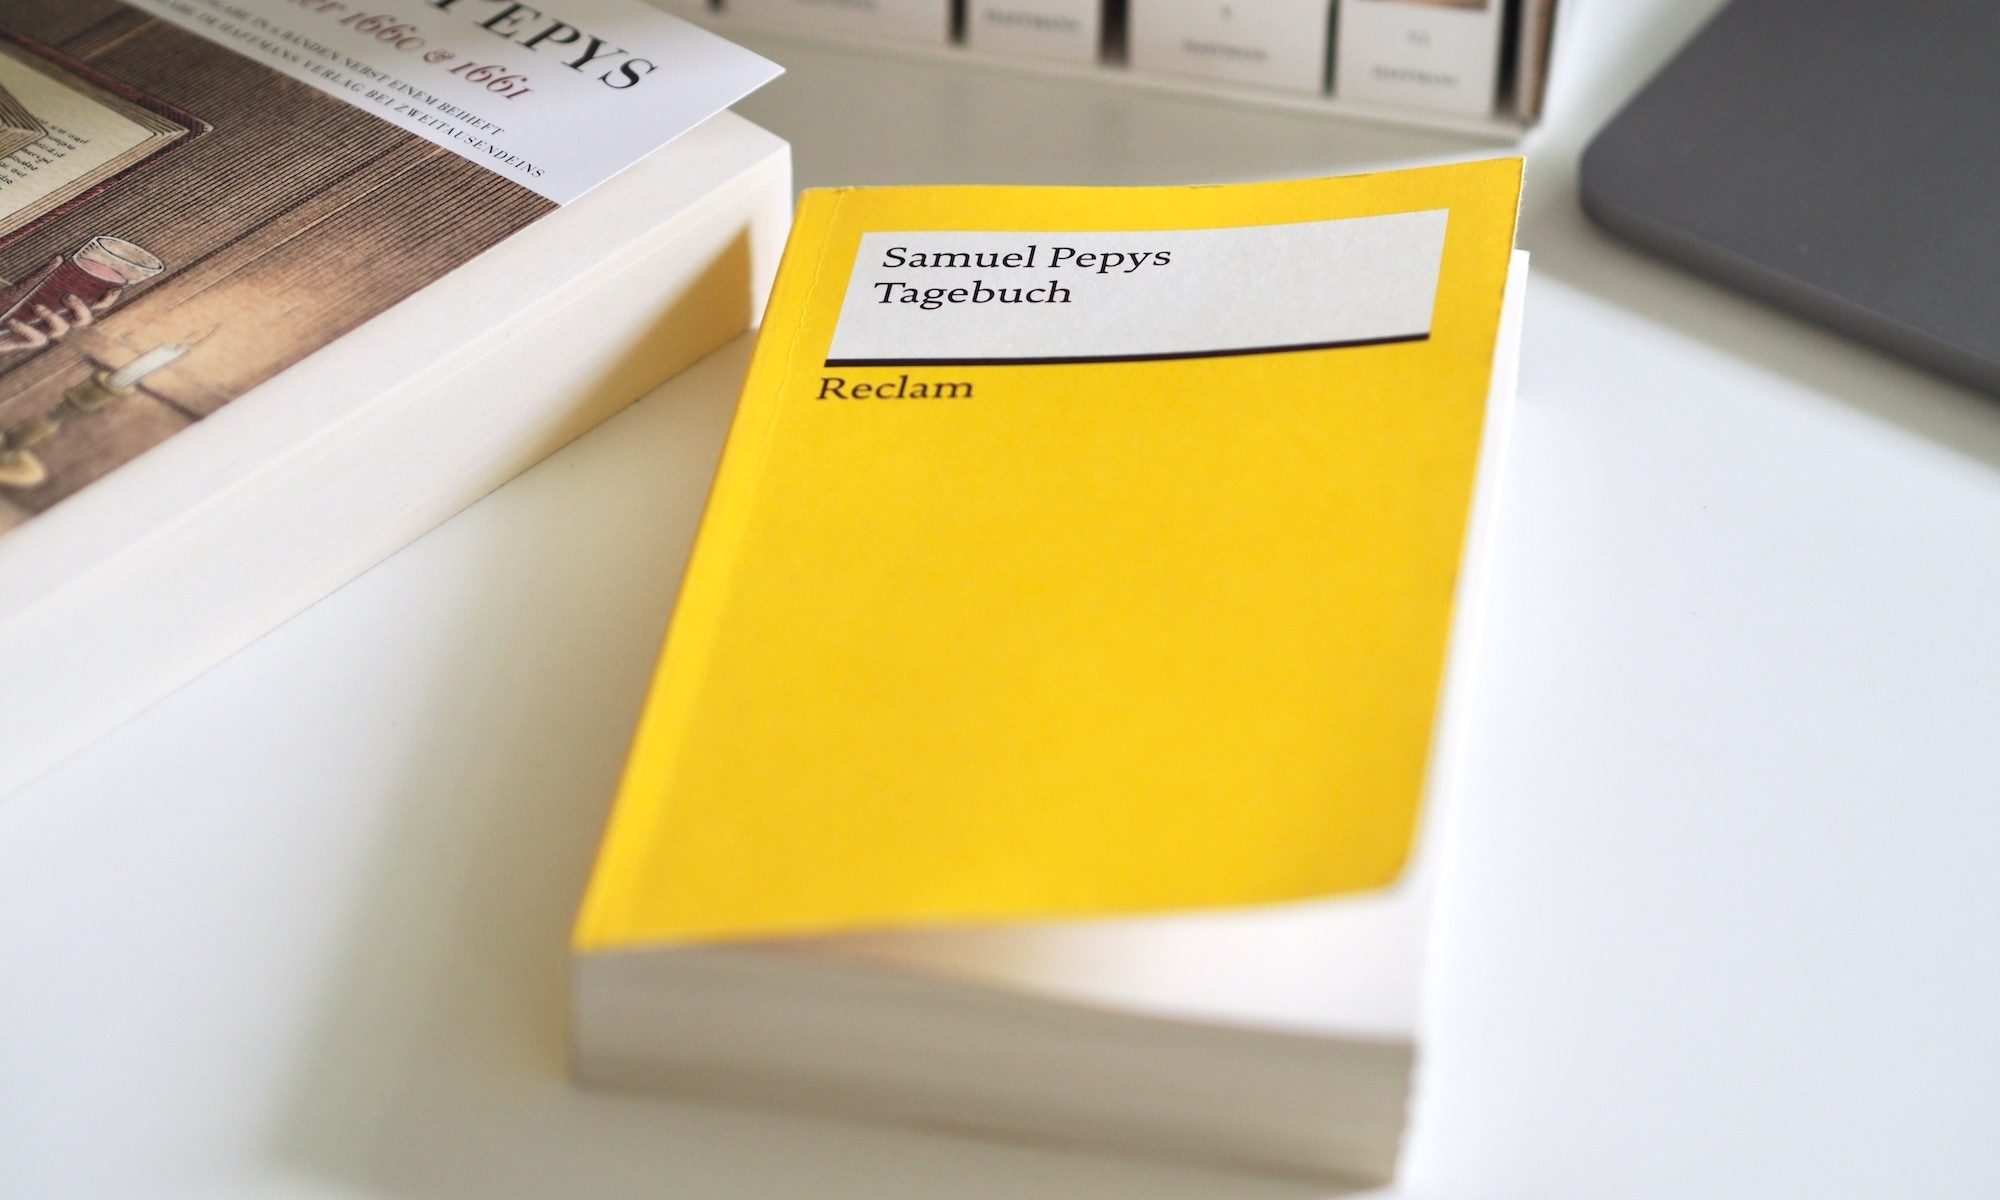 Samuel Pepys Tagebuch - Reclam | Foto: konsensor.de